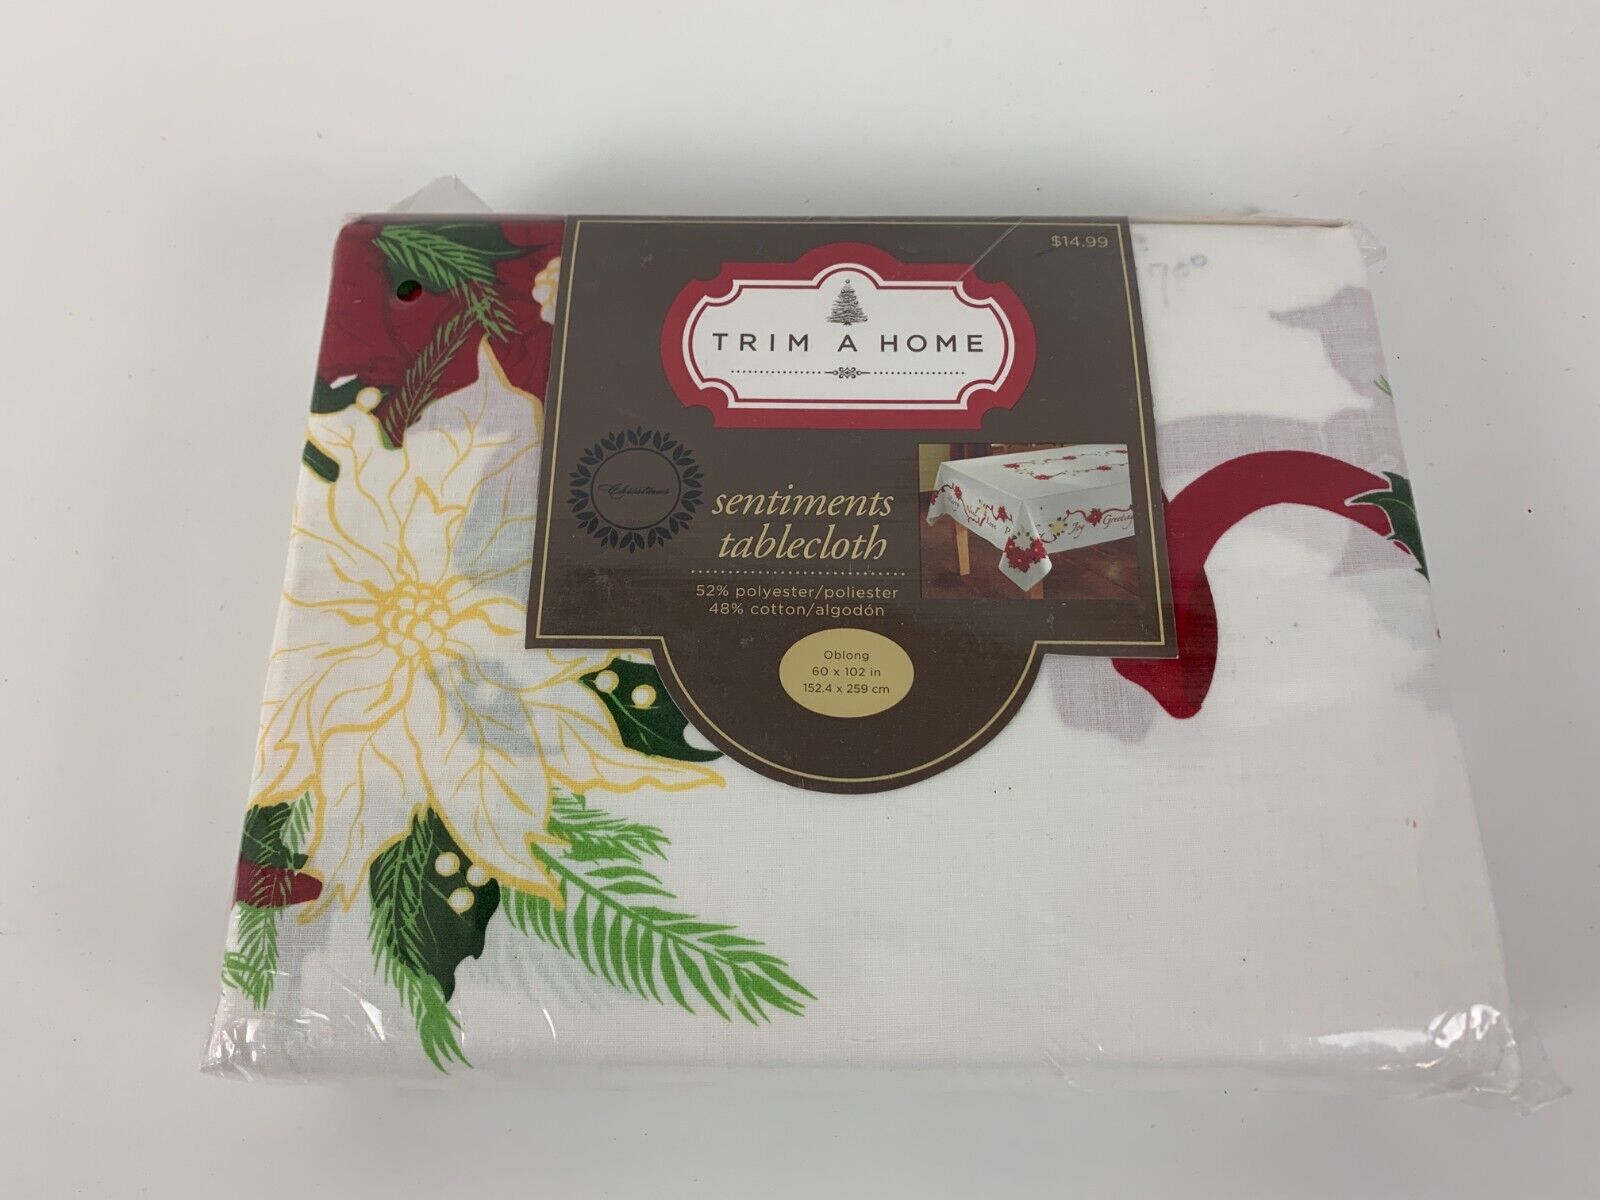 Christmas Fabric Tablecloth Oblong 60x102 Sentiments Trim A Home Vintage KMART